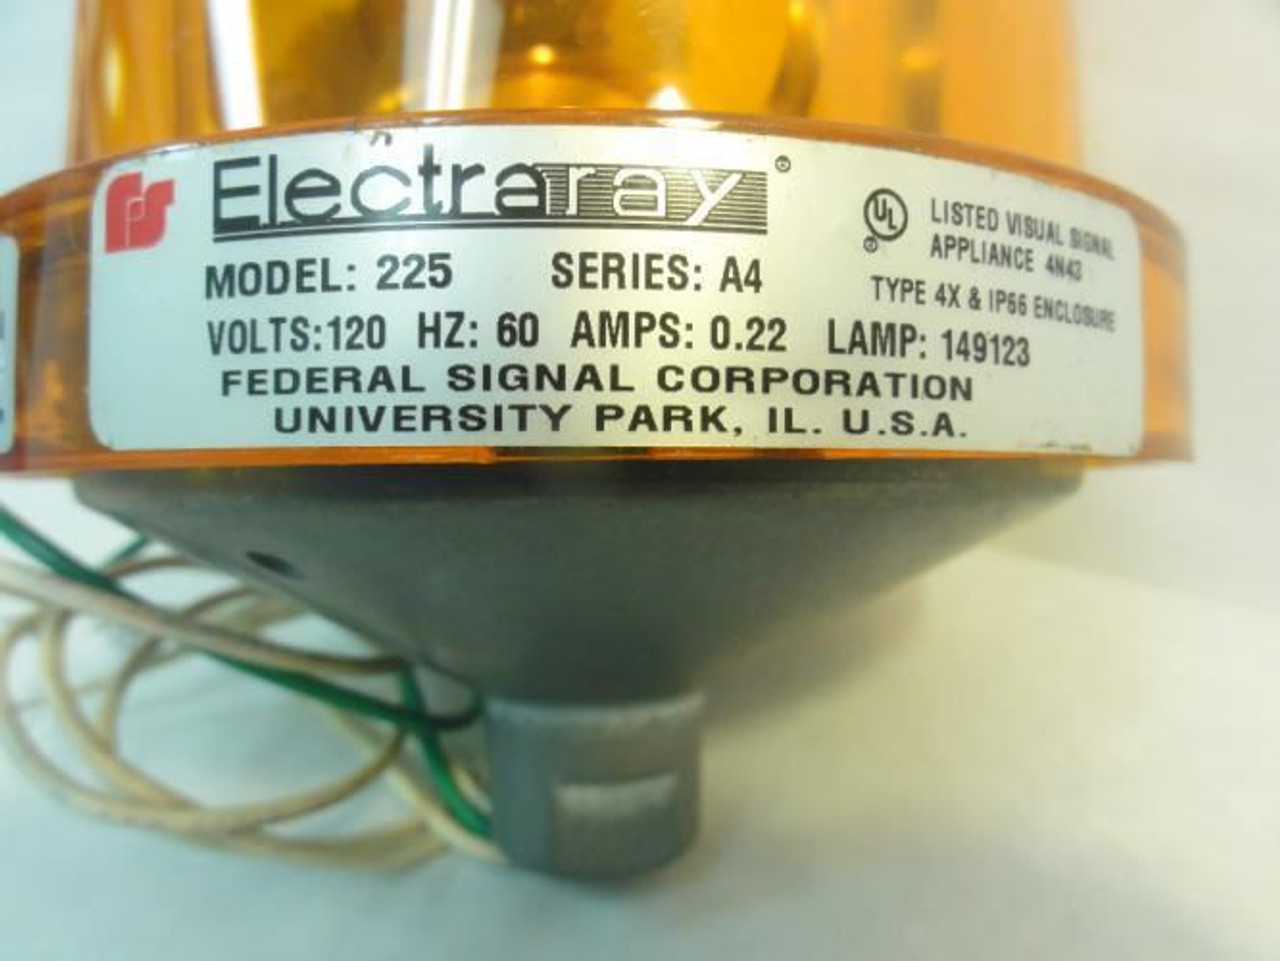 Electraray 225-120A; Rotating Amber Warning Light; 120V; 0.22A